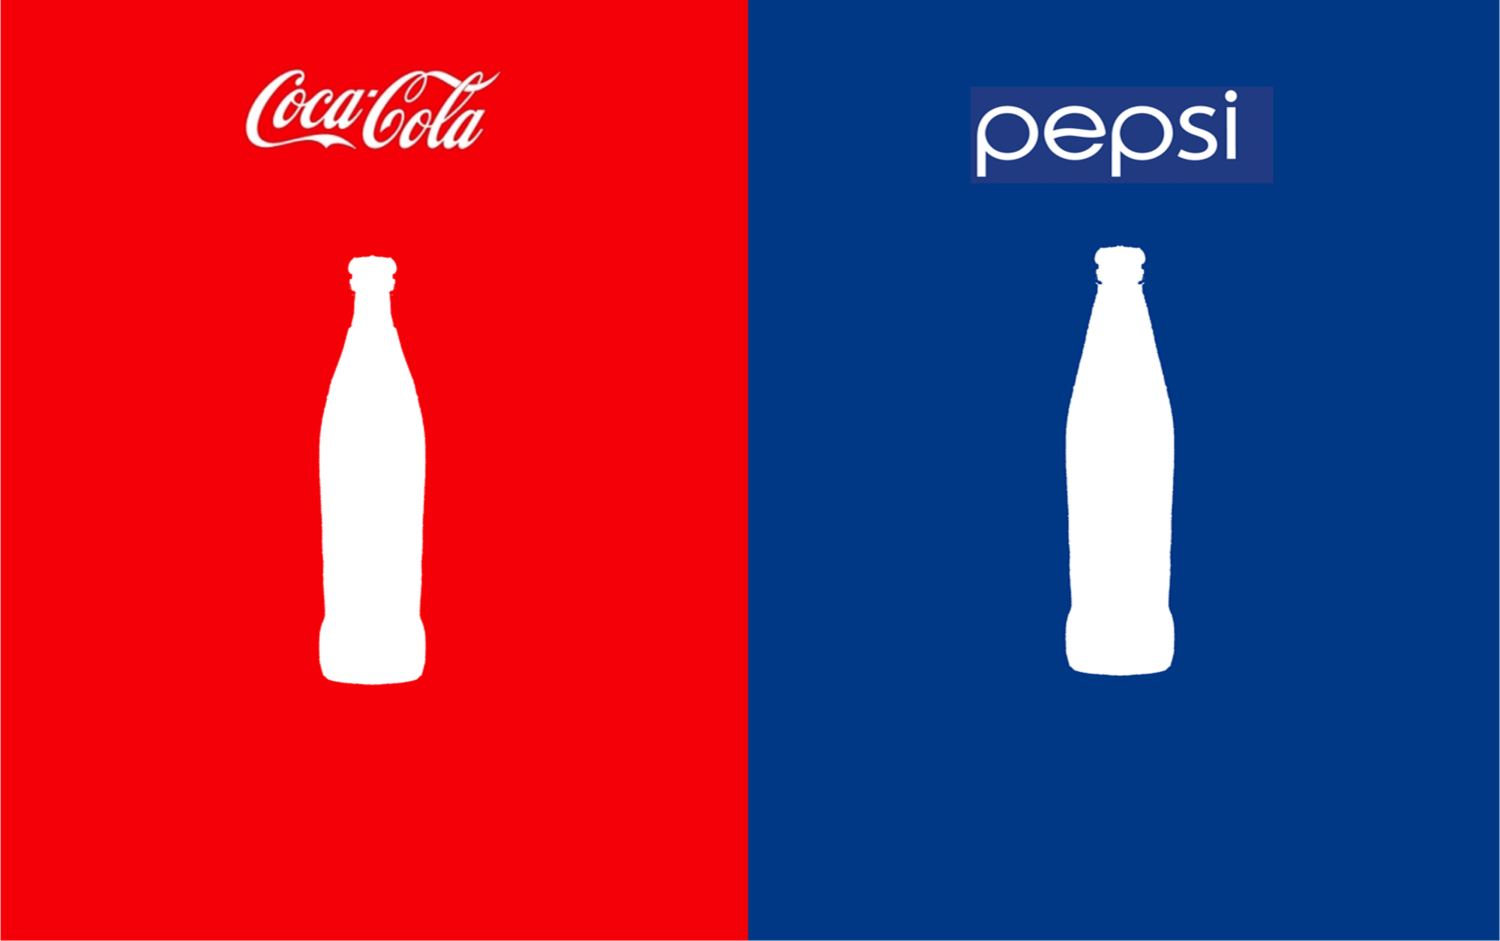 Oι διαφορετικές εκστρατείες της Coca-Cola και Pepsi